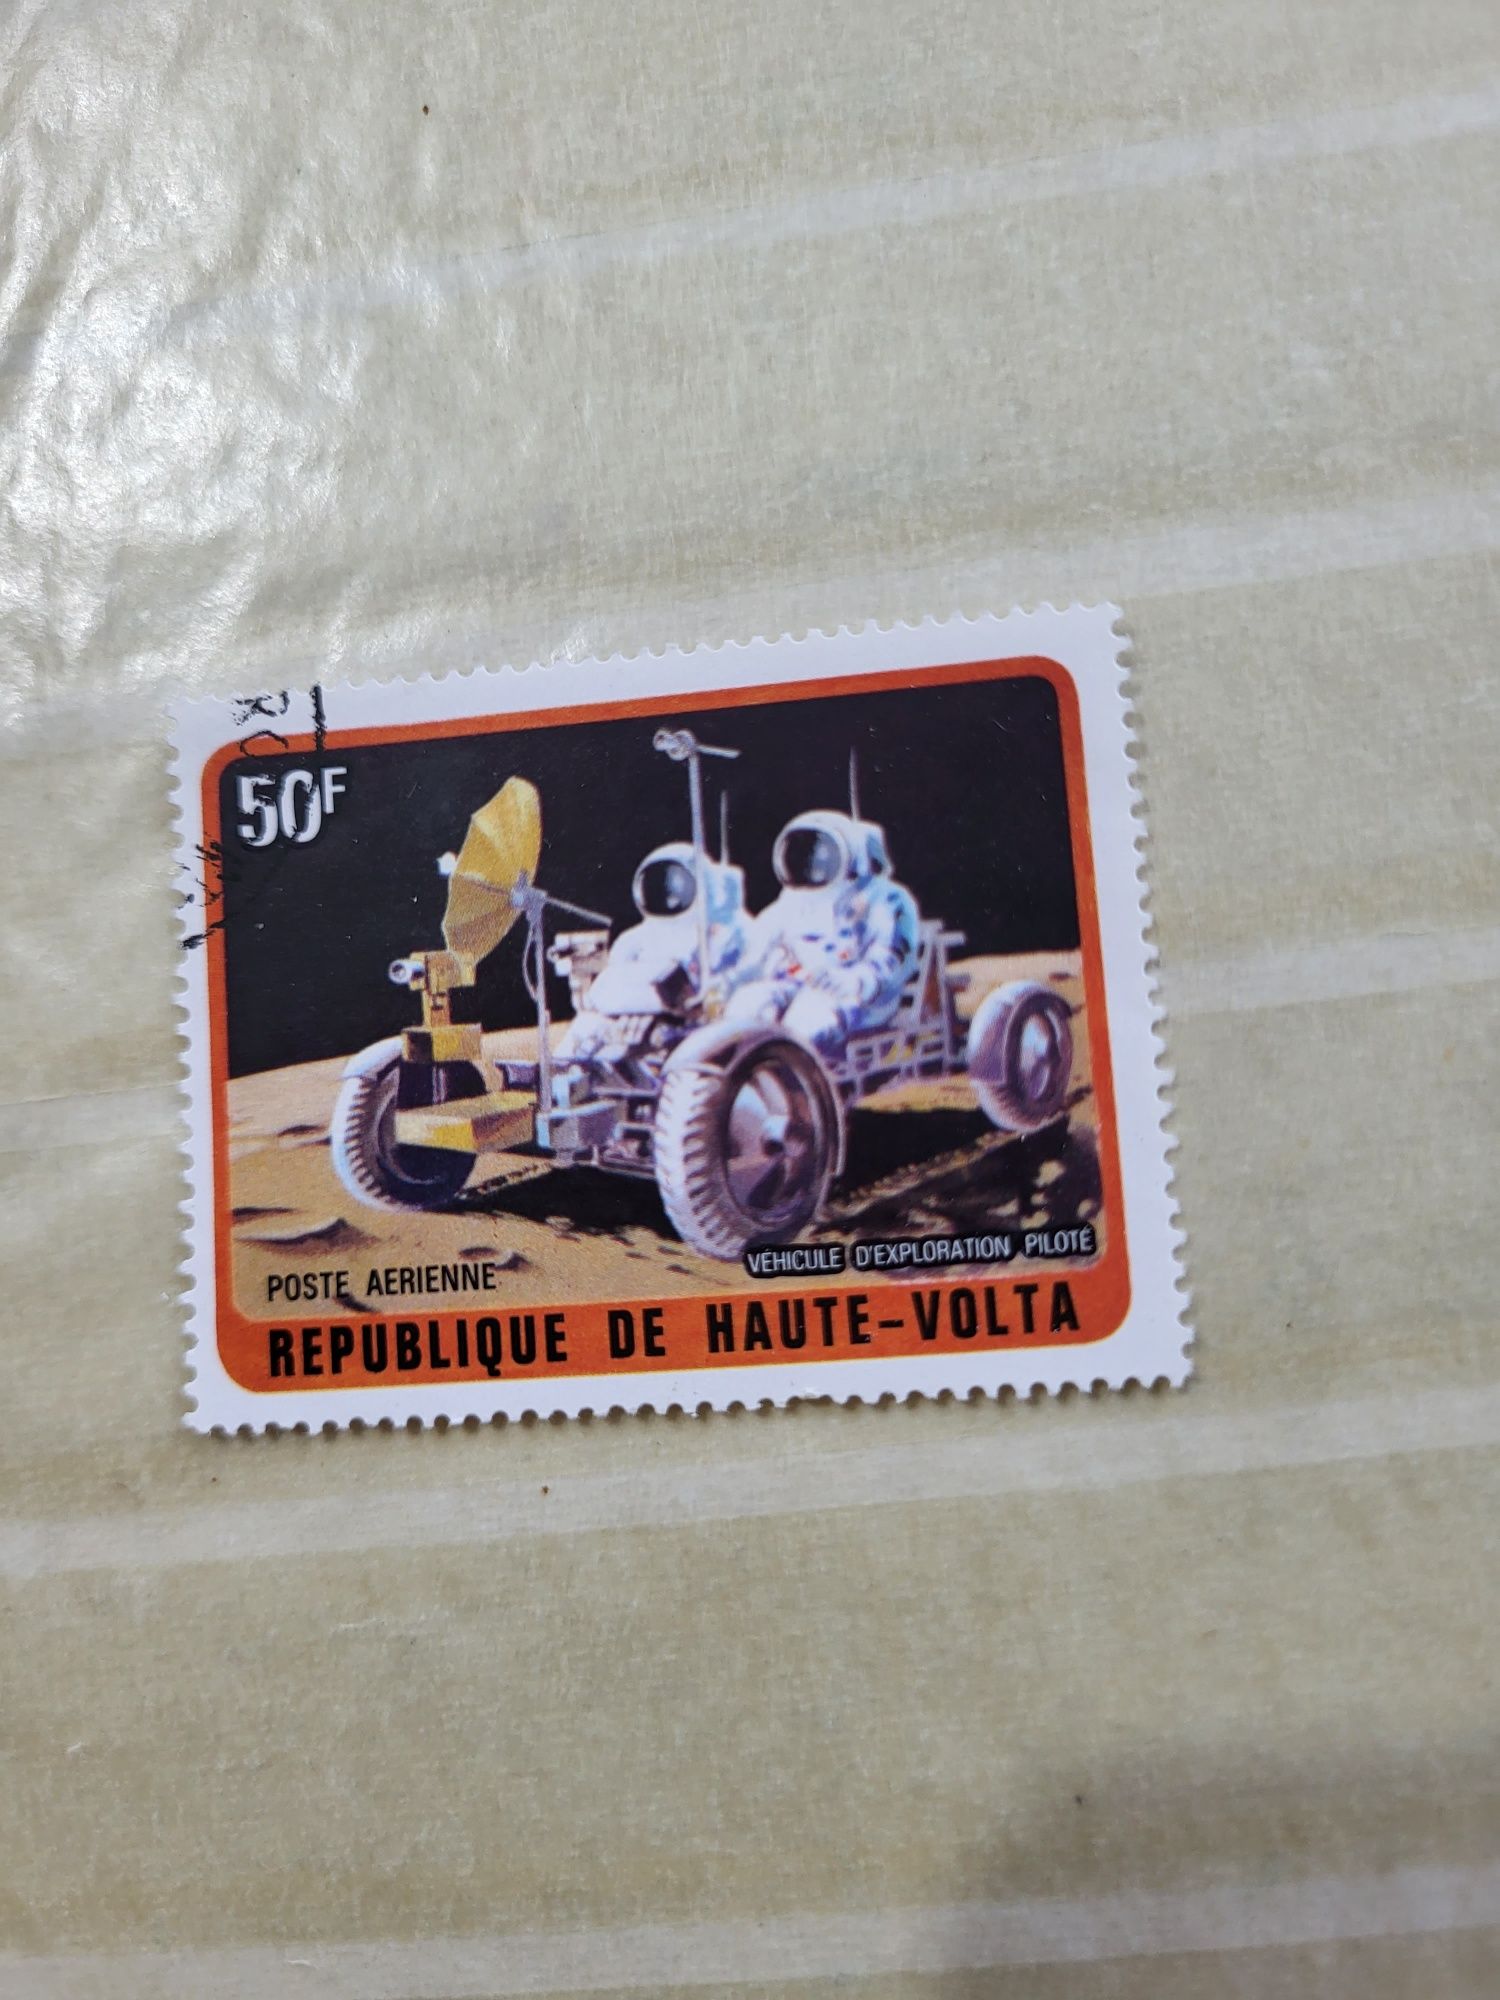 Serie timbre spațiale